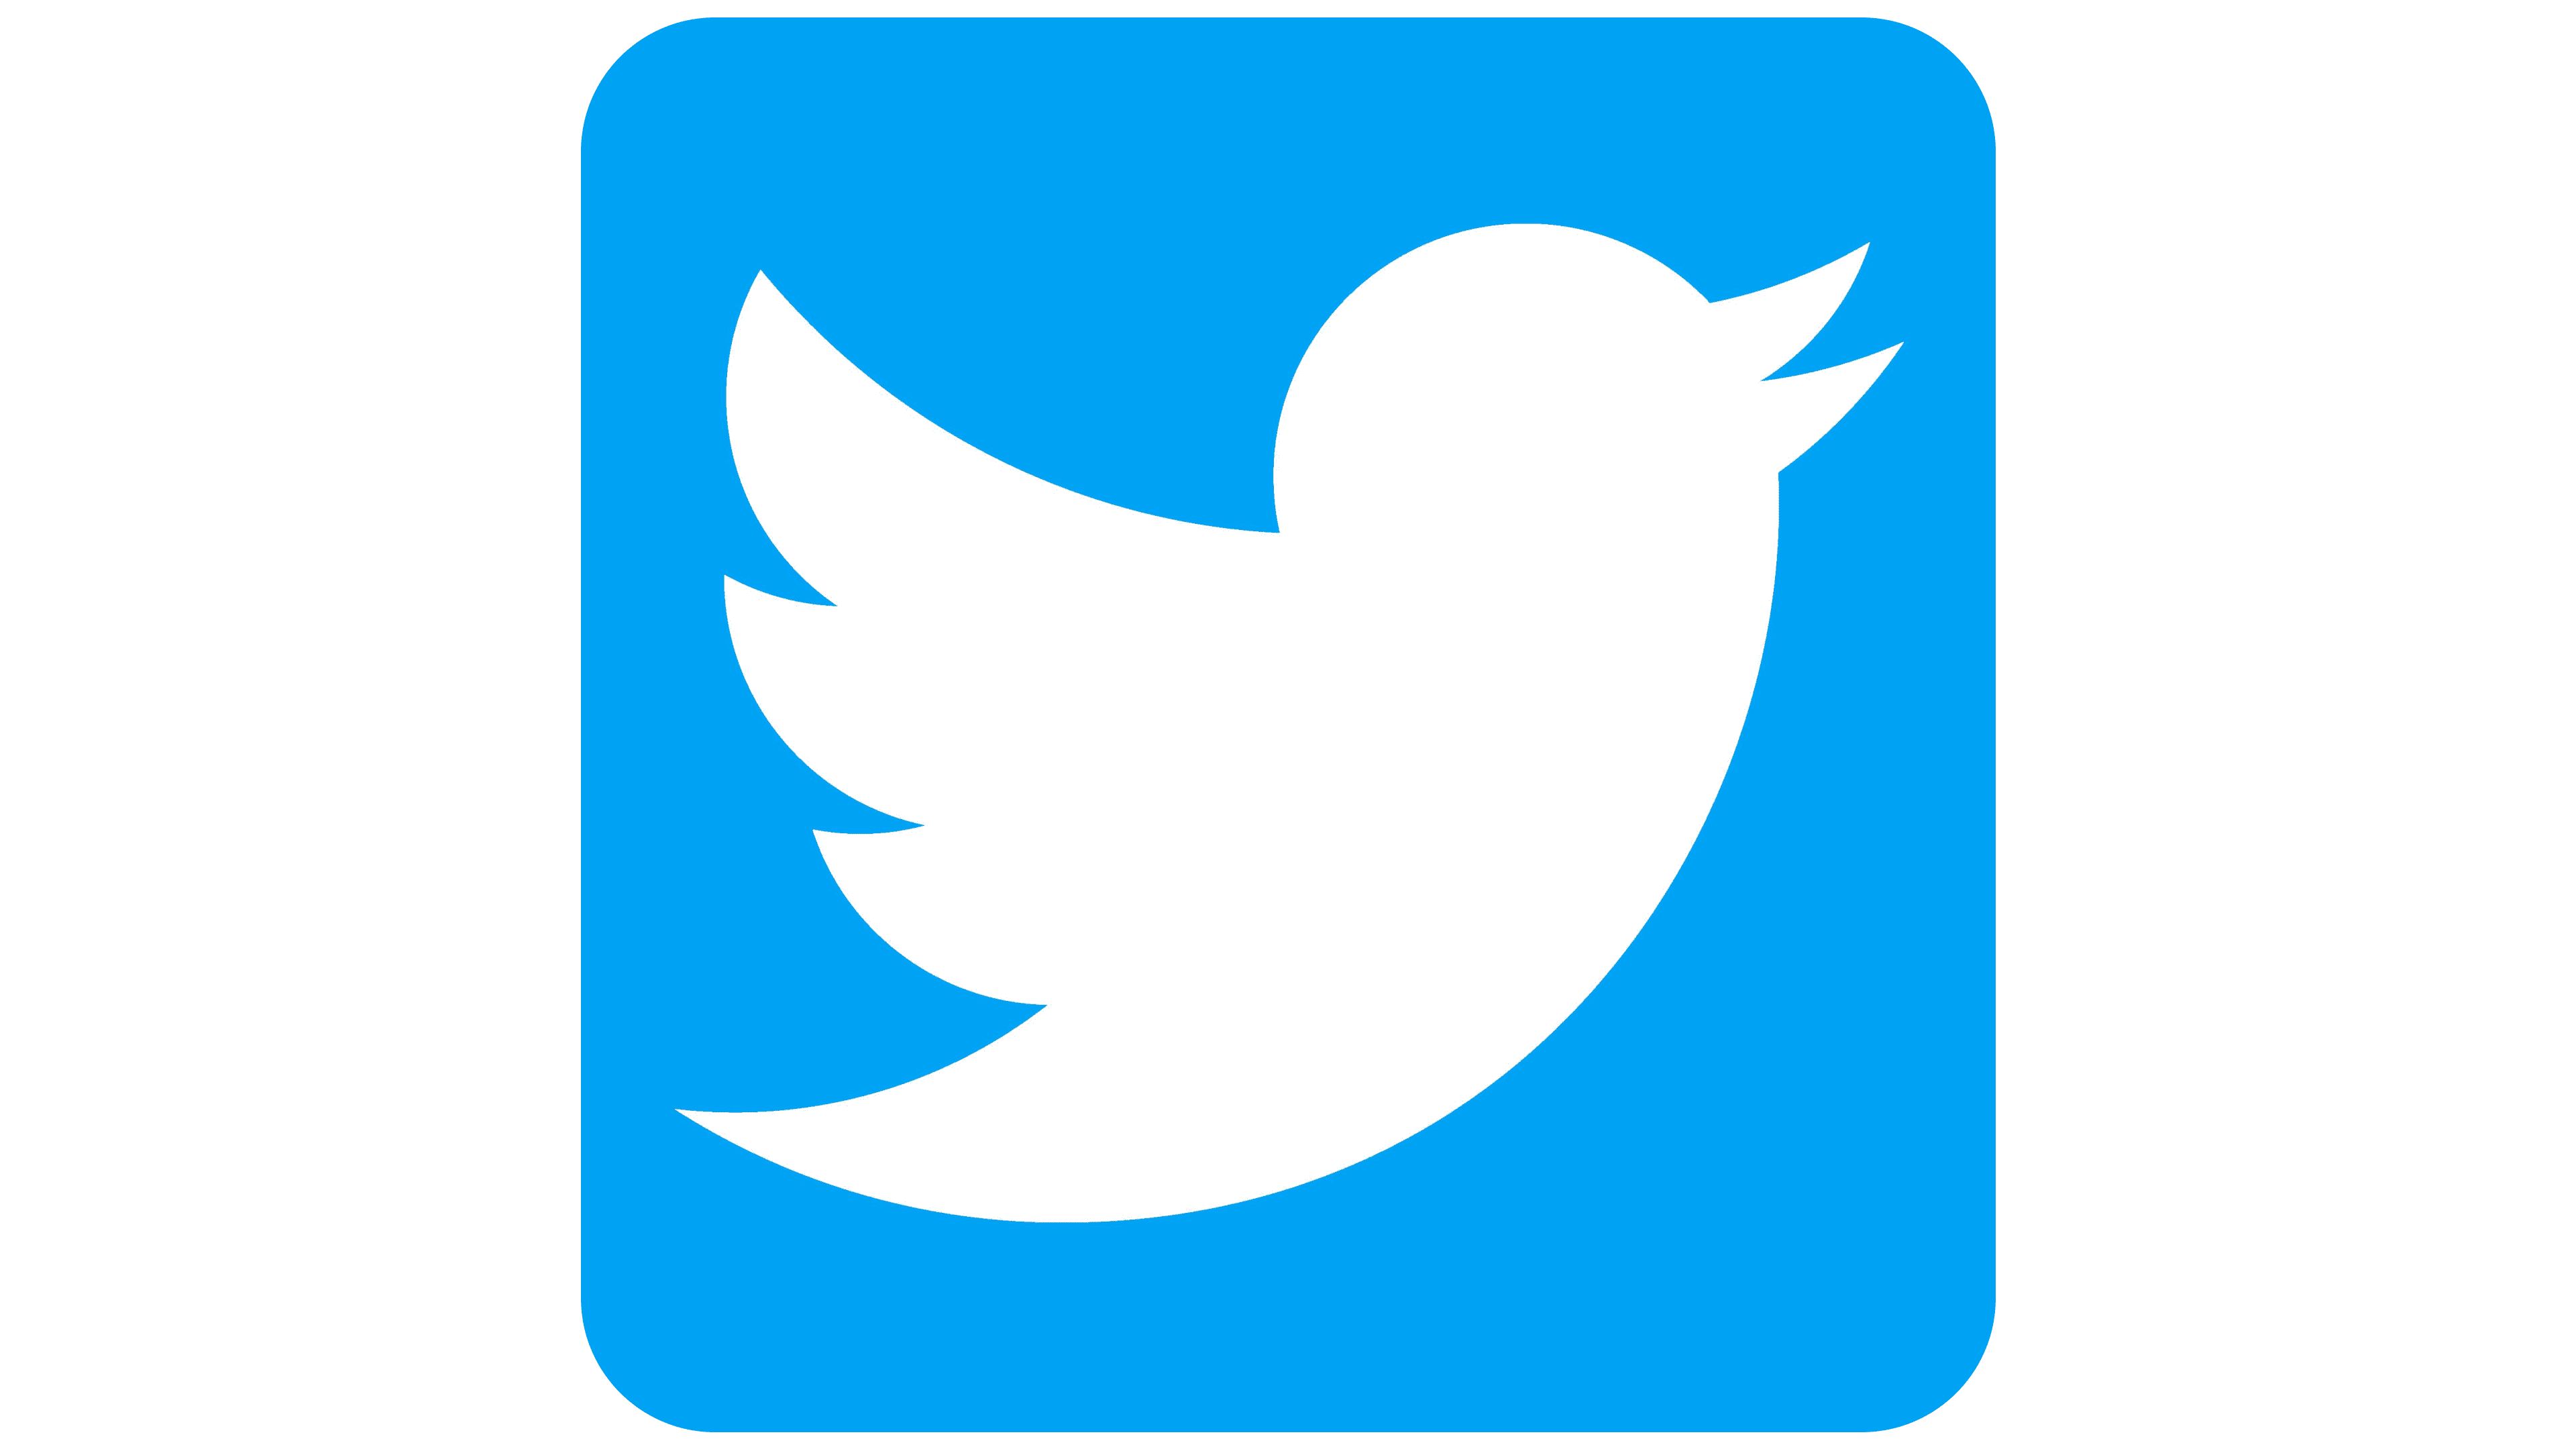 Twitter animations. Твиттер. Иконка твиттера. Логотип twitter. Логотип Твиттер фото.